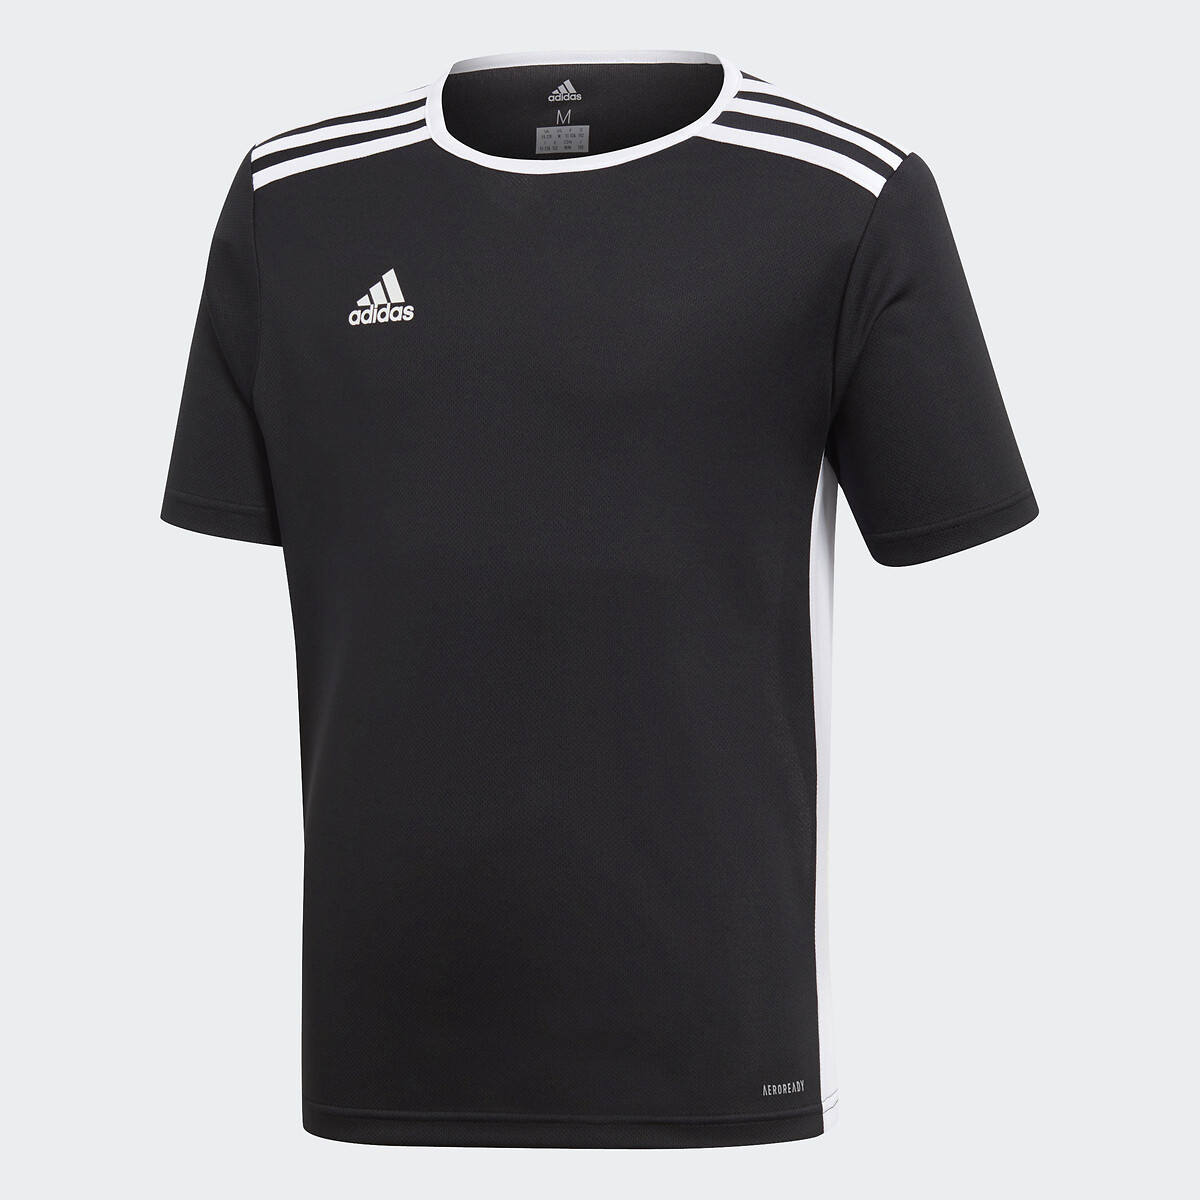 Fussball-trikot schwarz/weiss Adidas Performance | La Redoute